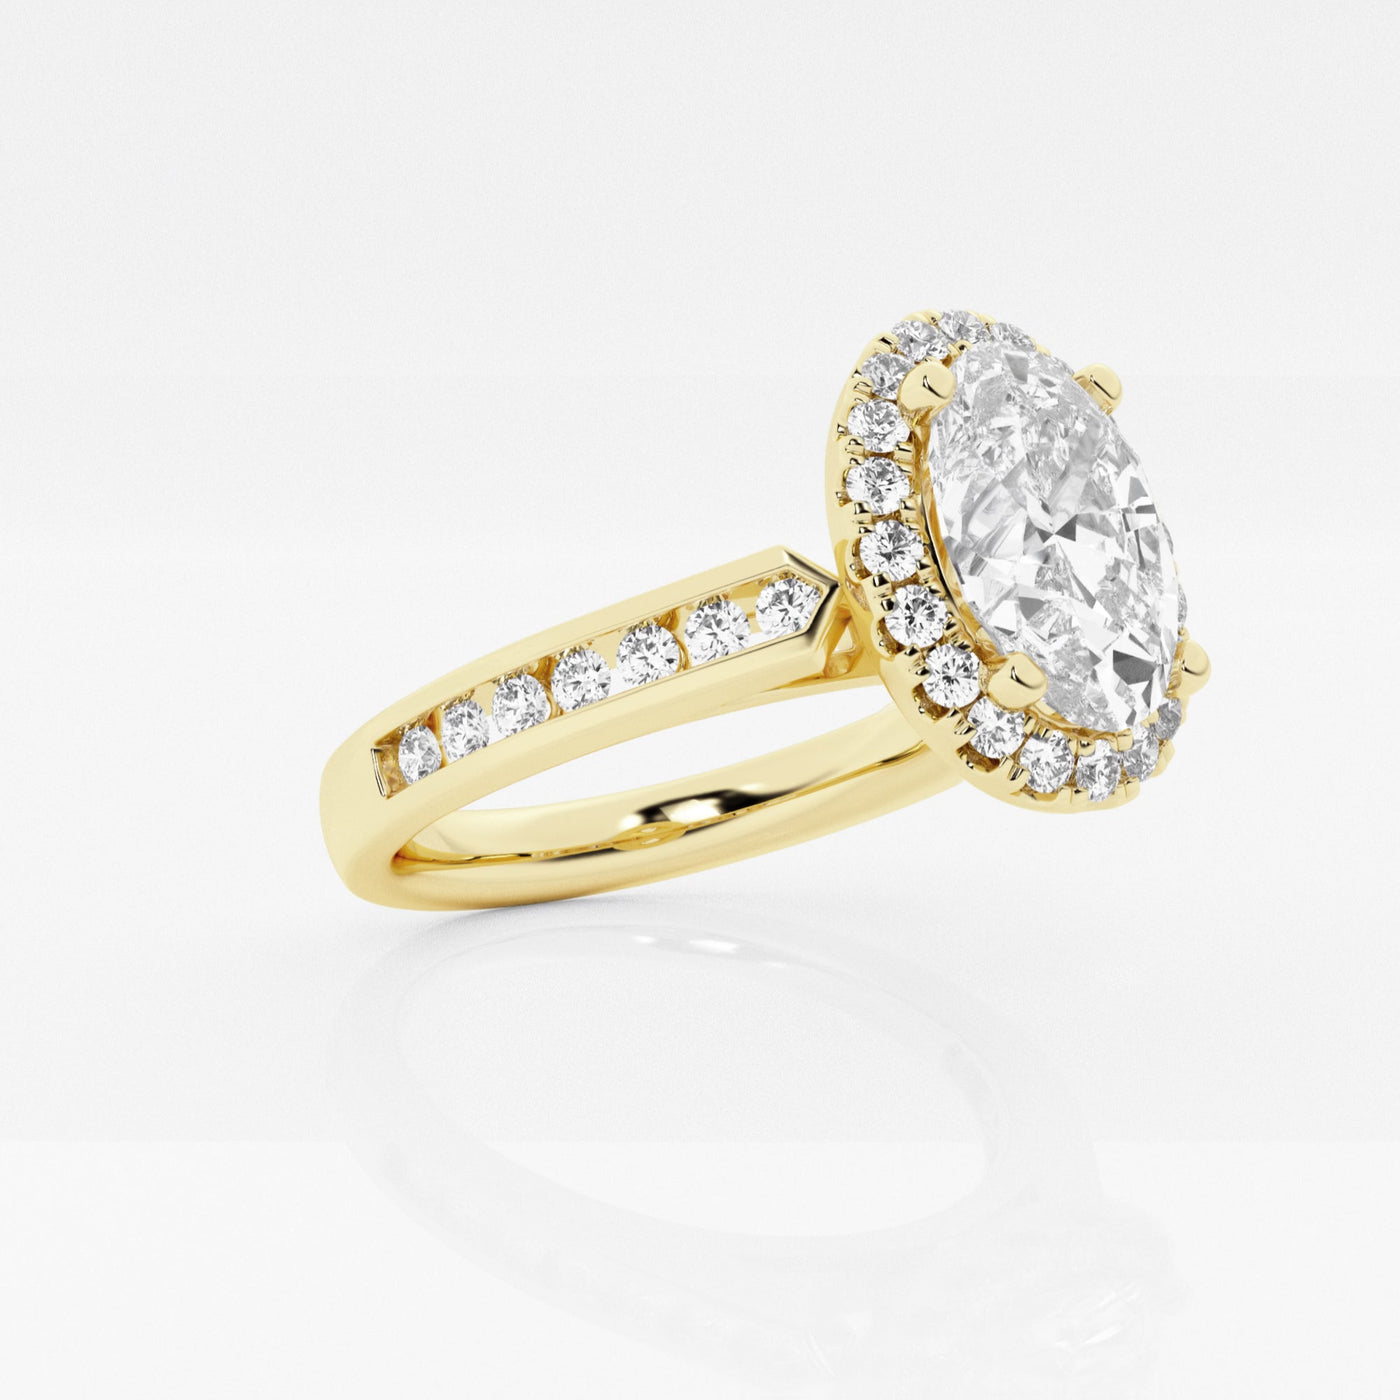 @SKU:LGR0635X4O200H1GY4~#carat_2.52#diamond-quality_fg,-vs2+#metal_18k-yellow-gold